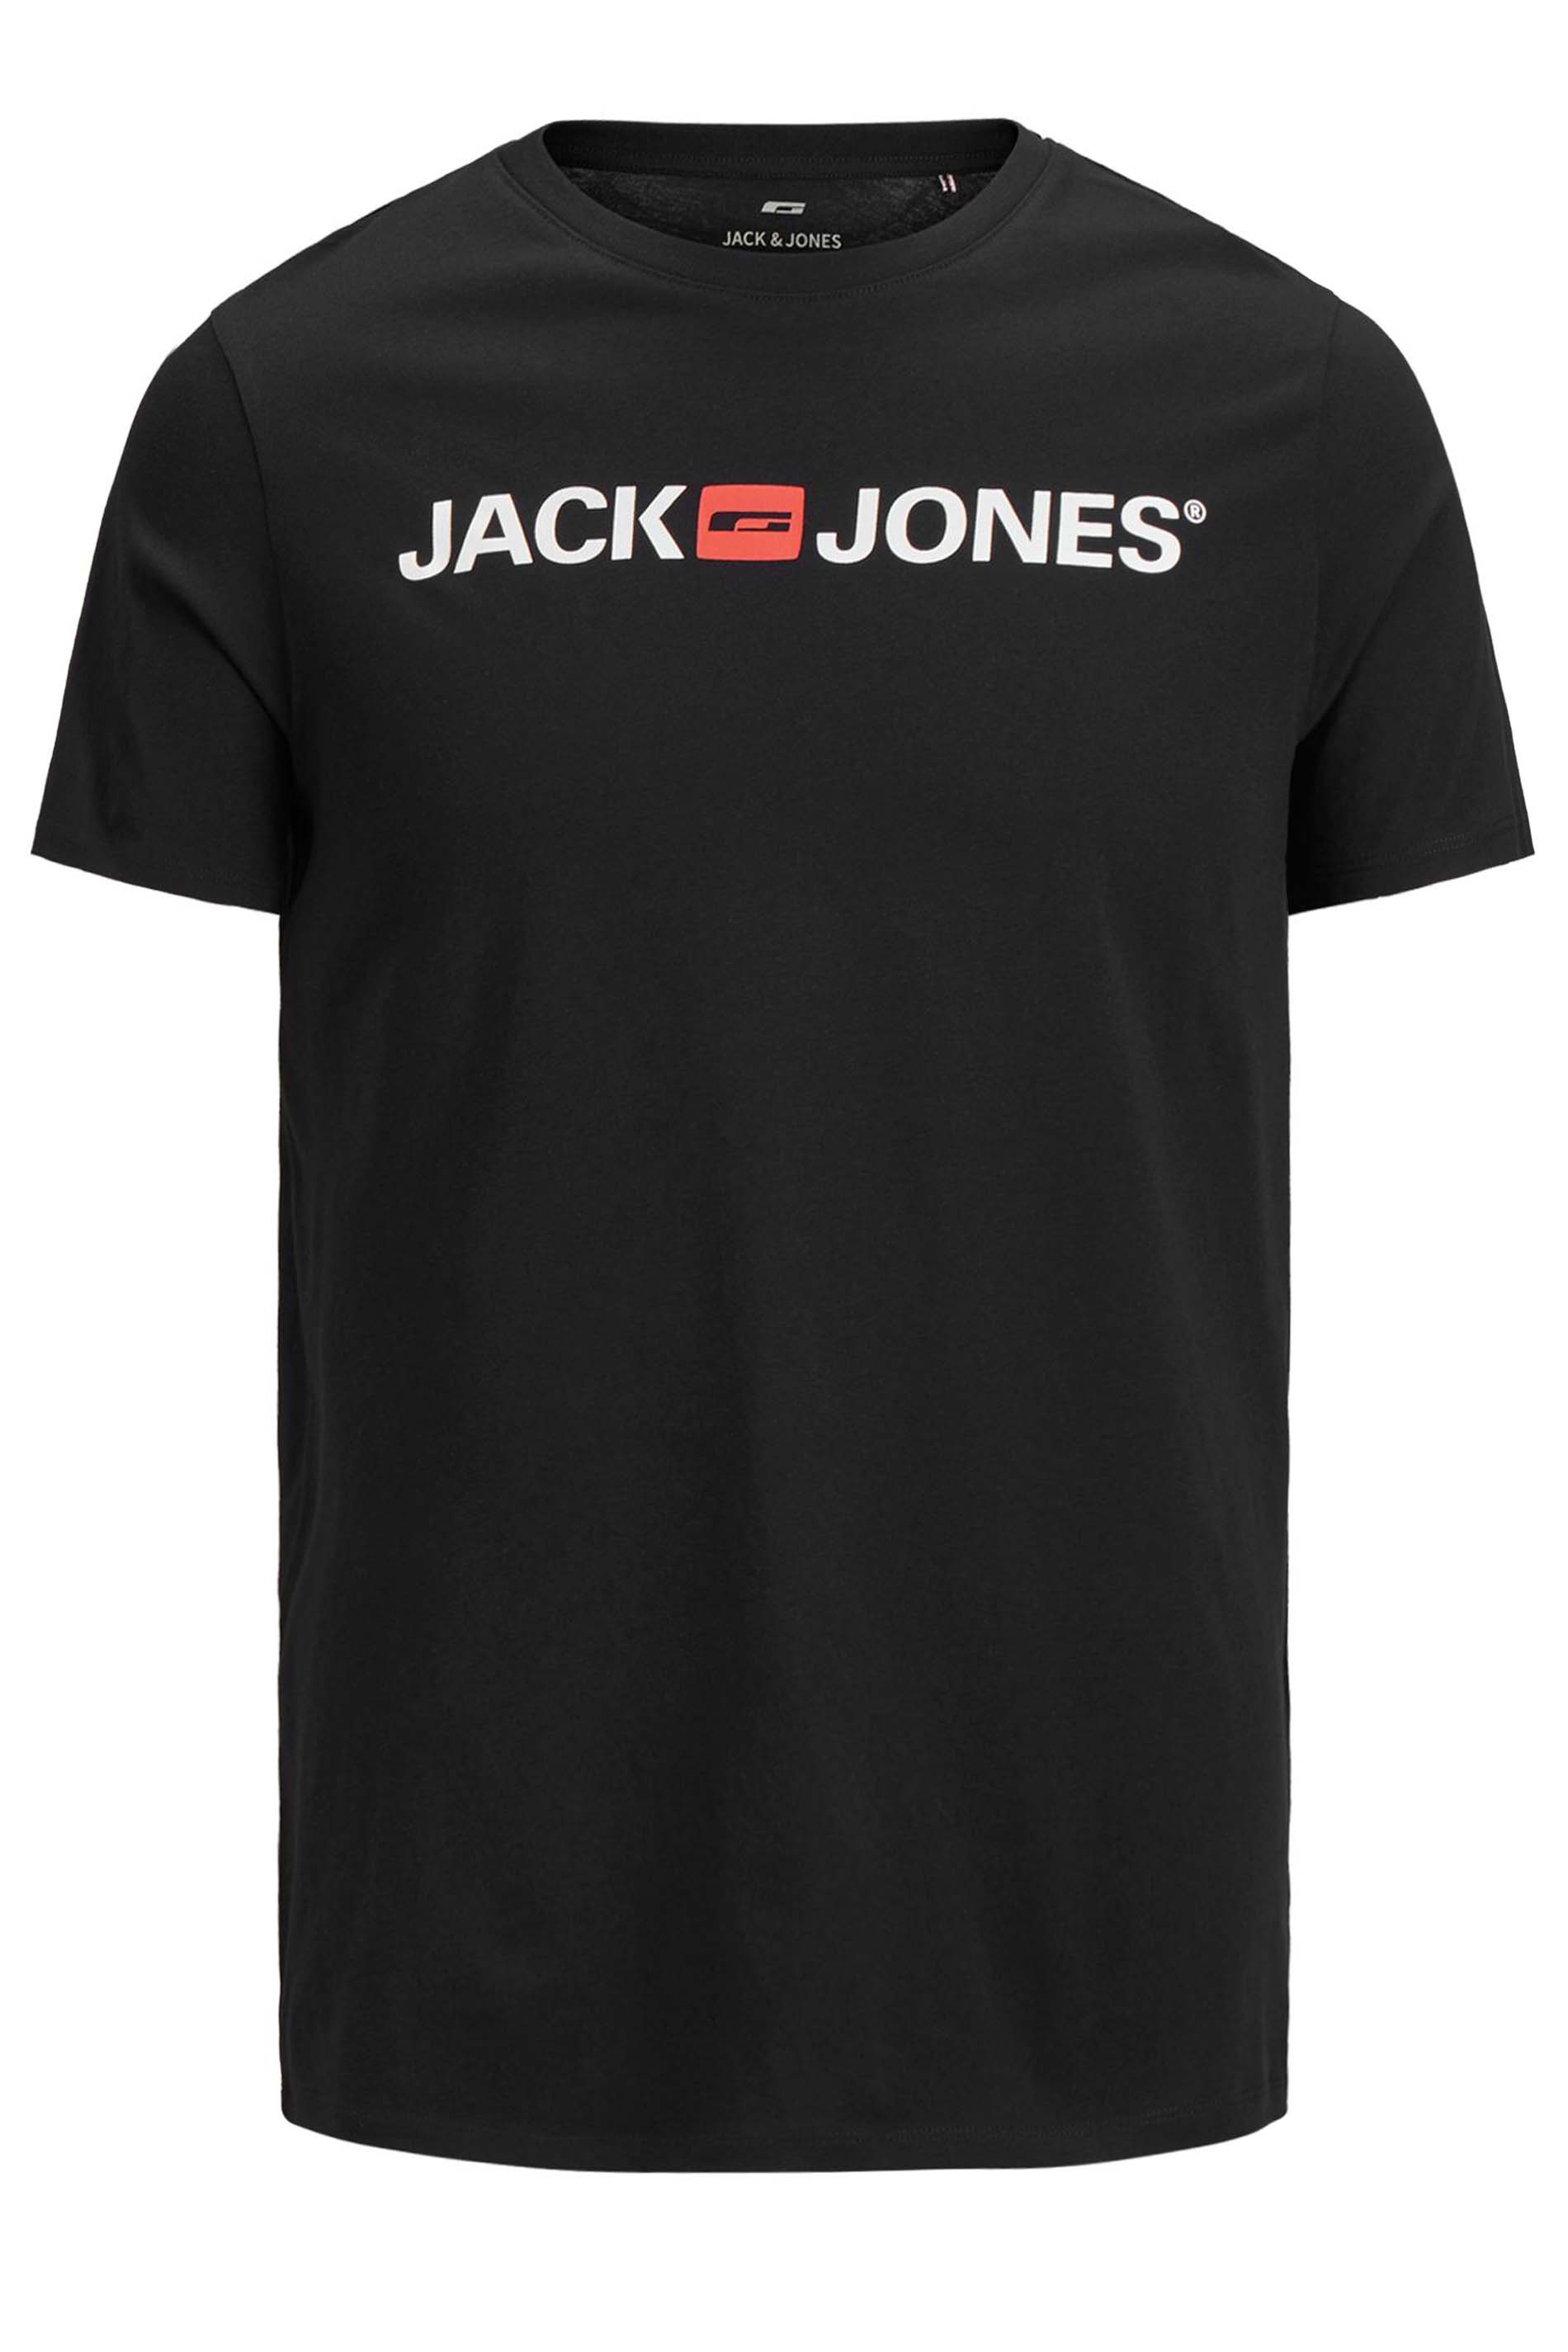 JACK & JONES Big & Tall Black Printed Logo T-Shirt | BadRhino 2